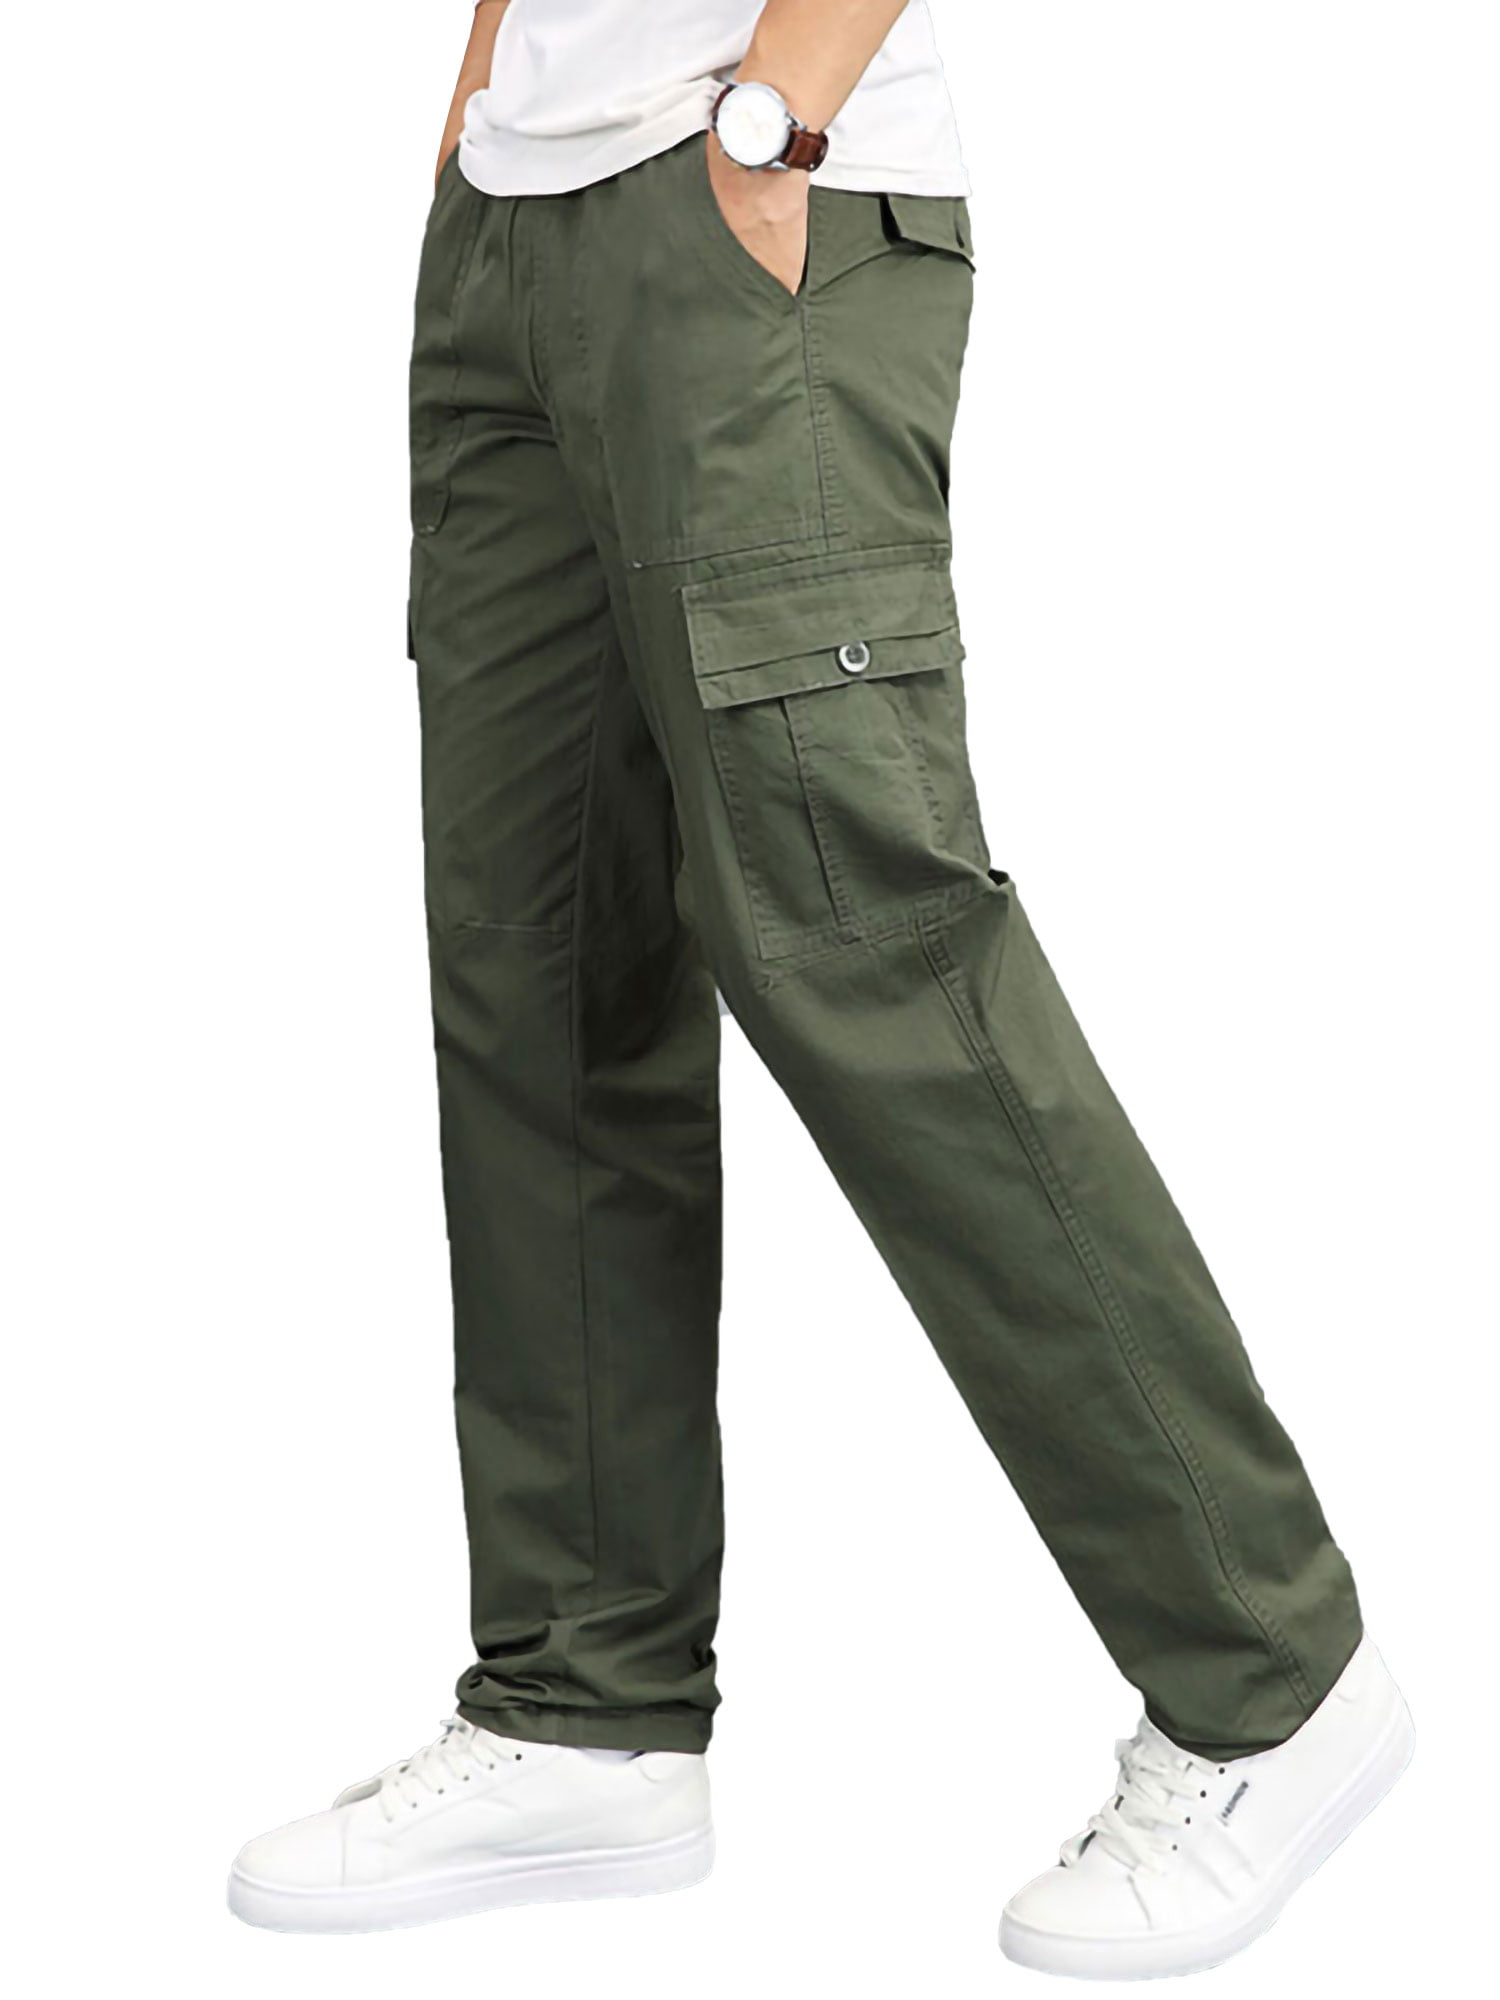 Mens Joggers Elasticated Waist Cargo Pants Slim Fit Casual Combat Work Trousers 